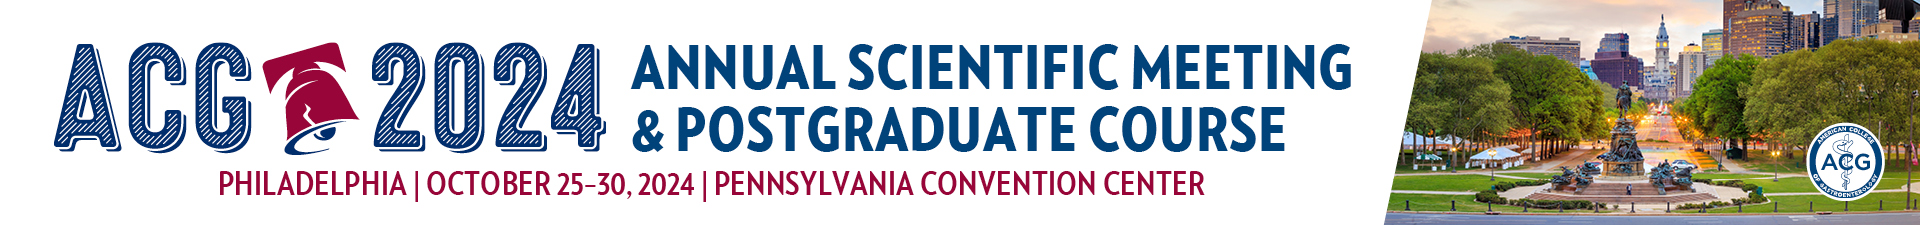 ACG 2021 Annual Scientific Meeting and Postgraduate Course